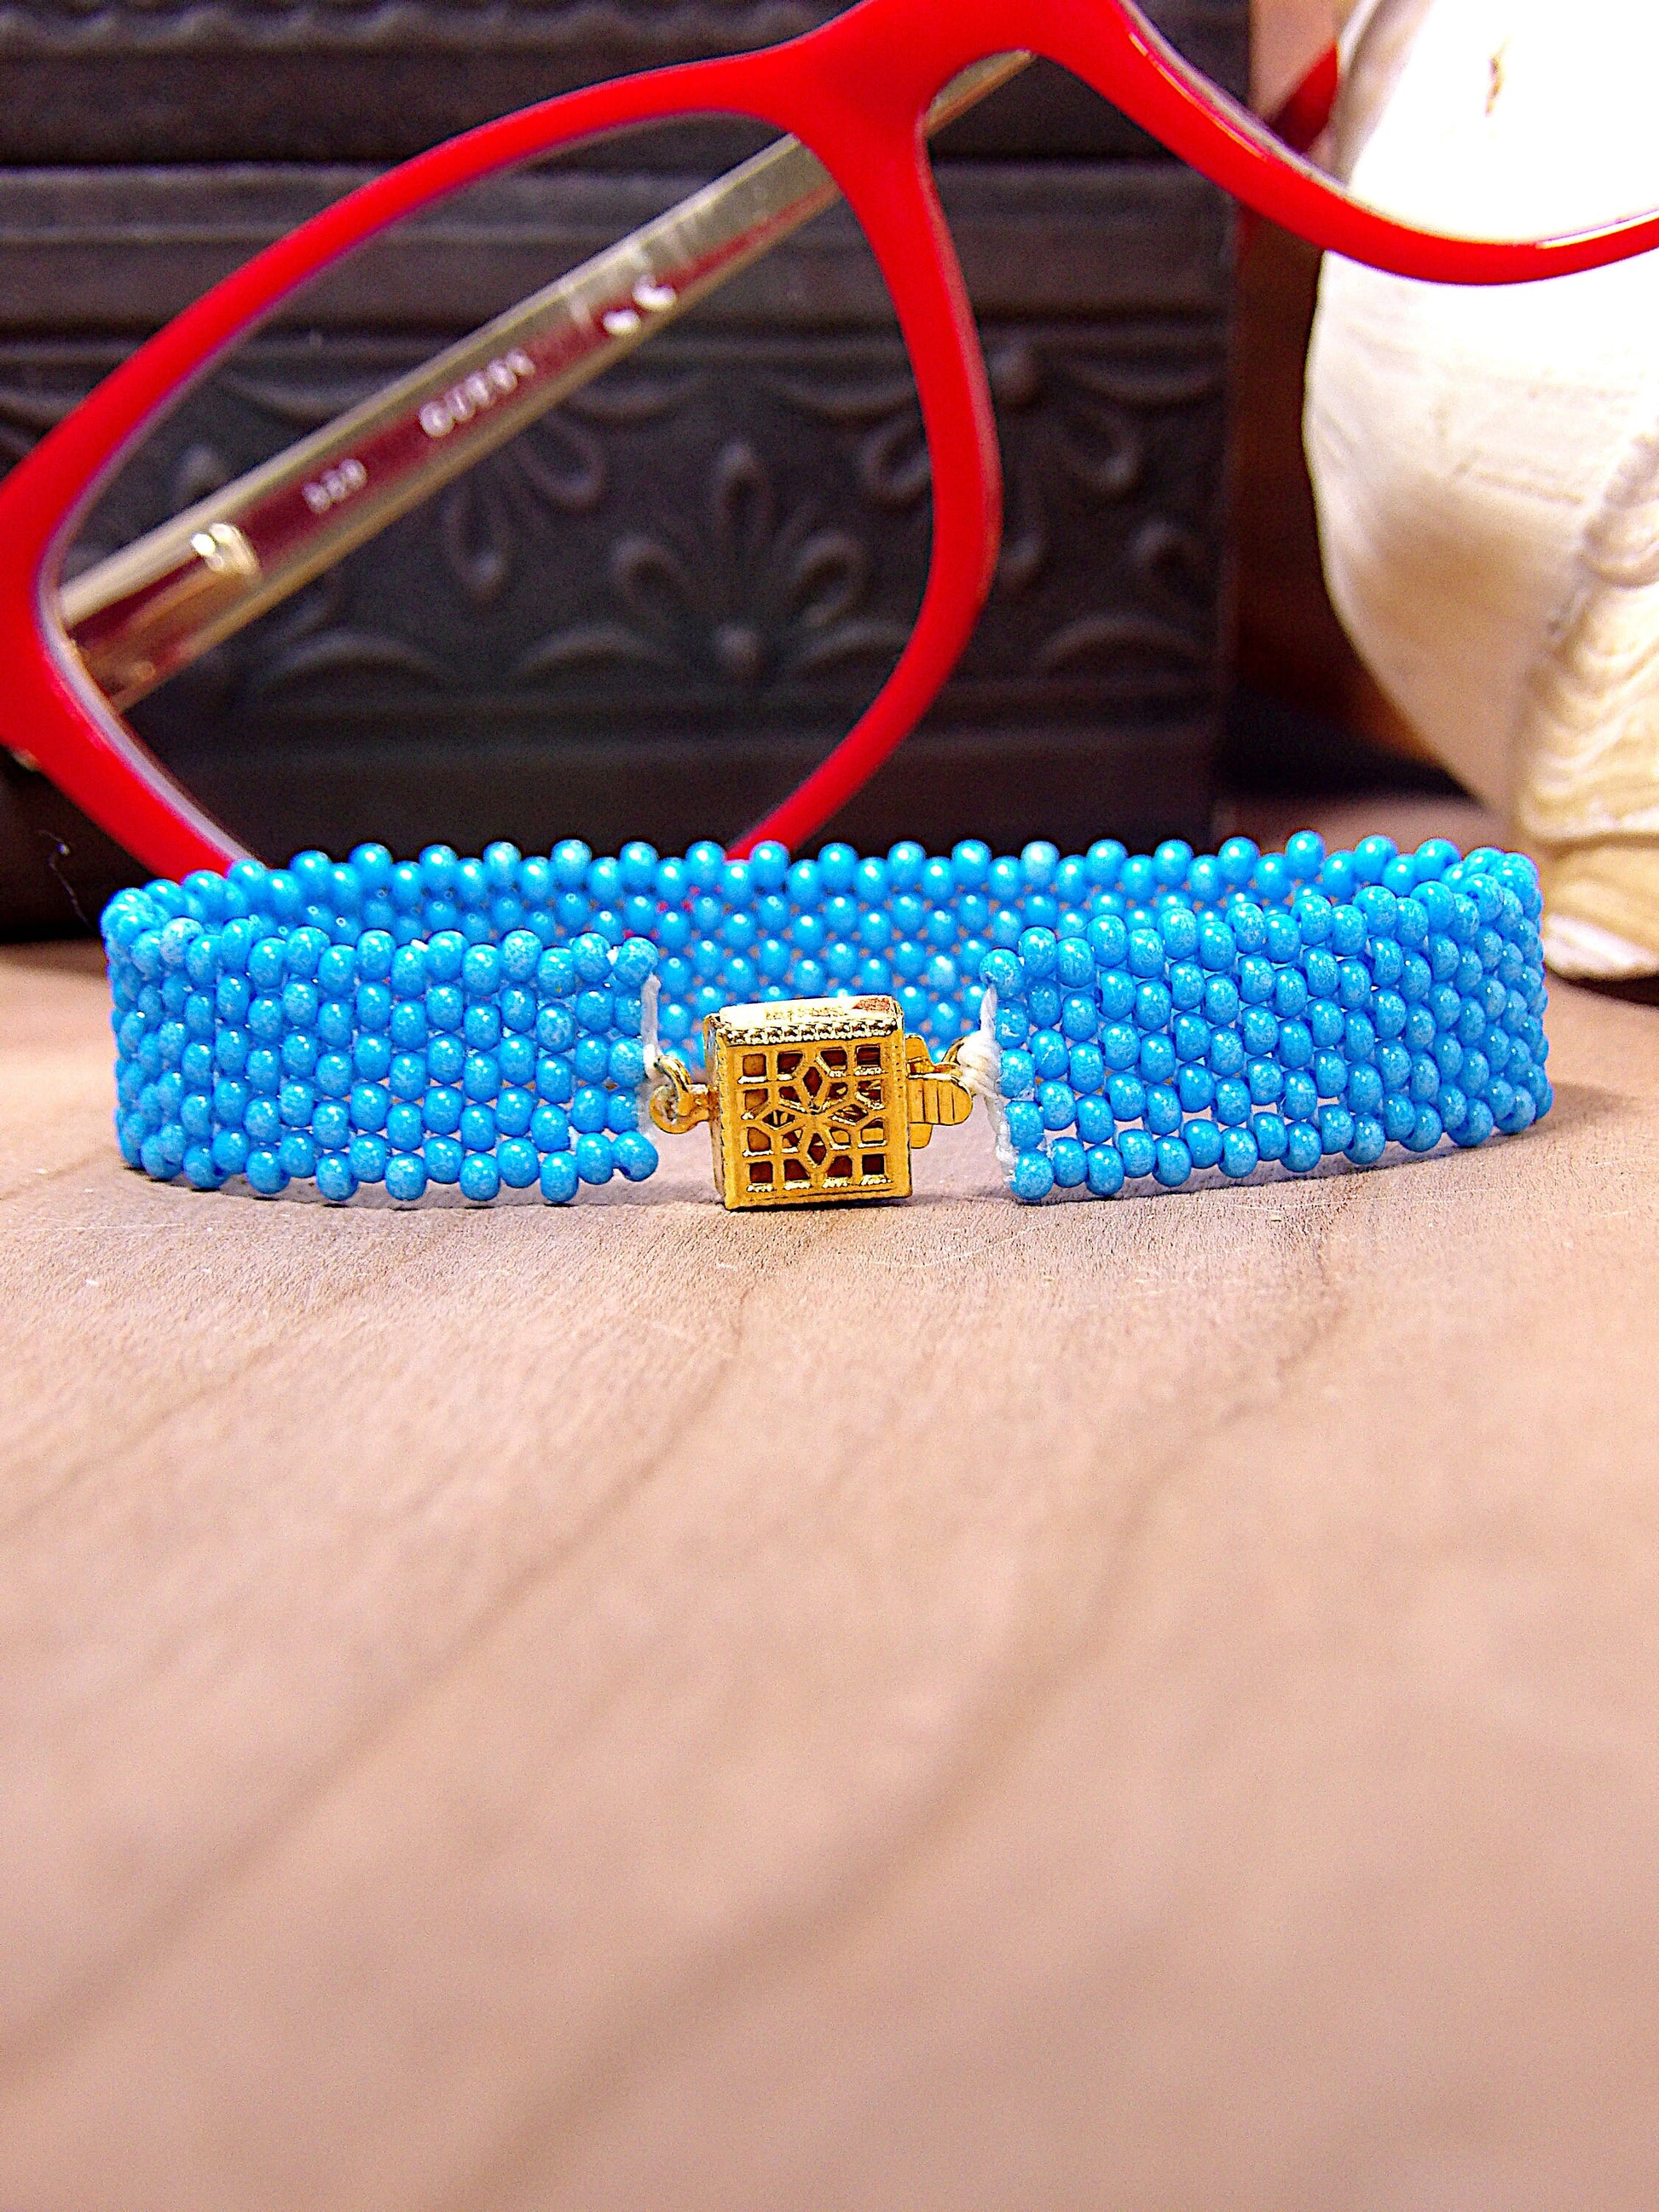 Blue Turquoise Czech Glass Seed Bead Bracelet w/Gold Filigree Box Clasp | Beaded Boho Cuff Bracelet | Woven Bohemian Jewelry | Boutique Gift